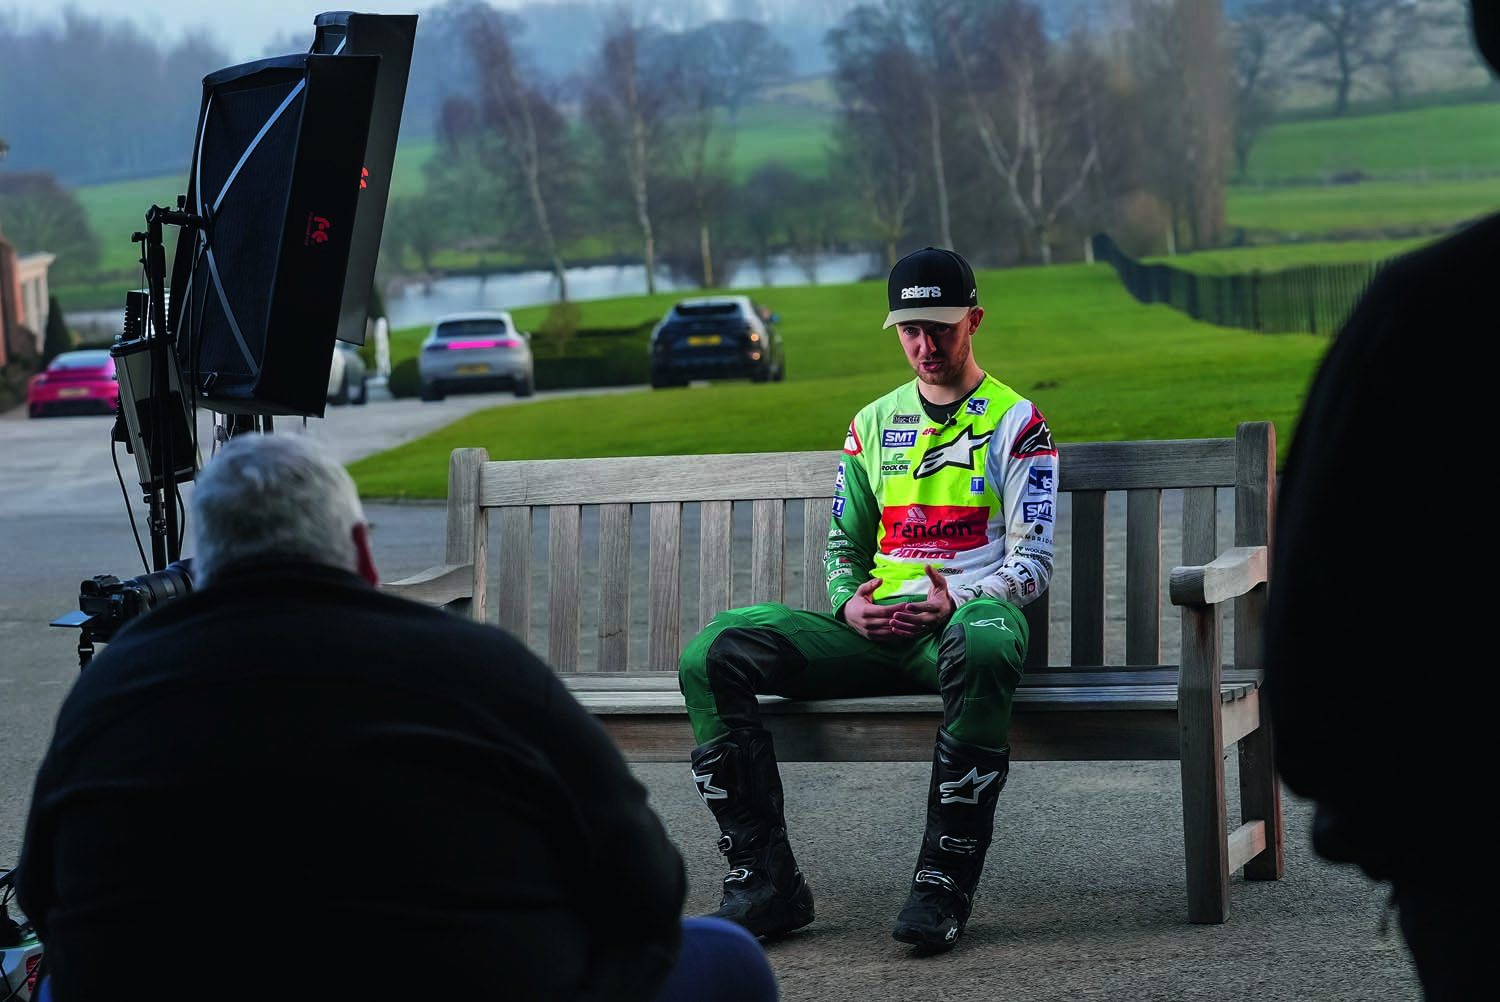 Man interviewing motocross rider on park bench